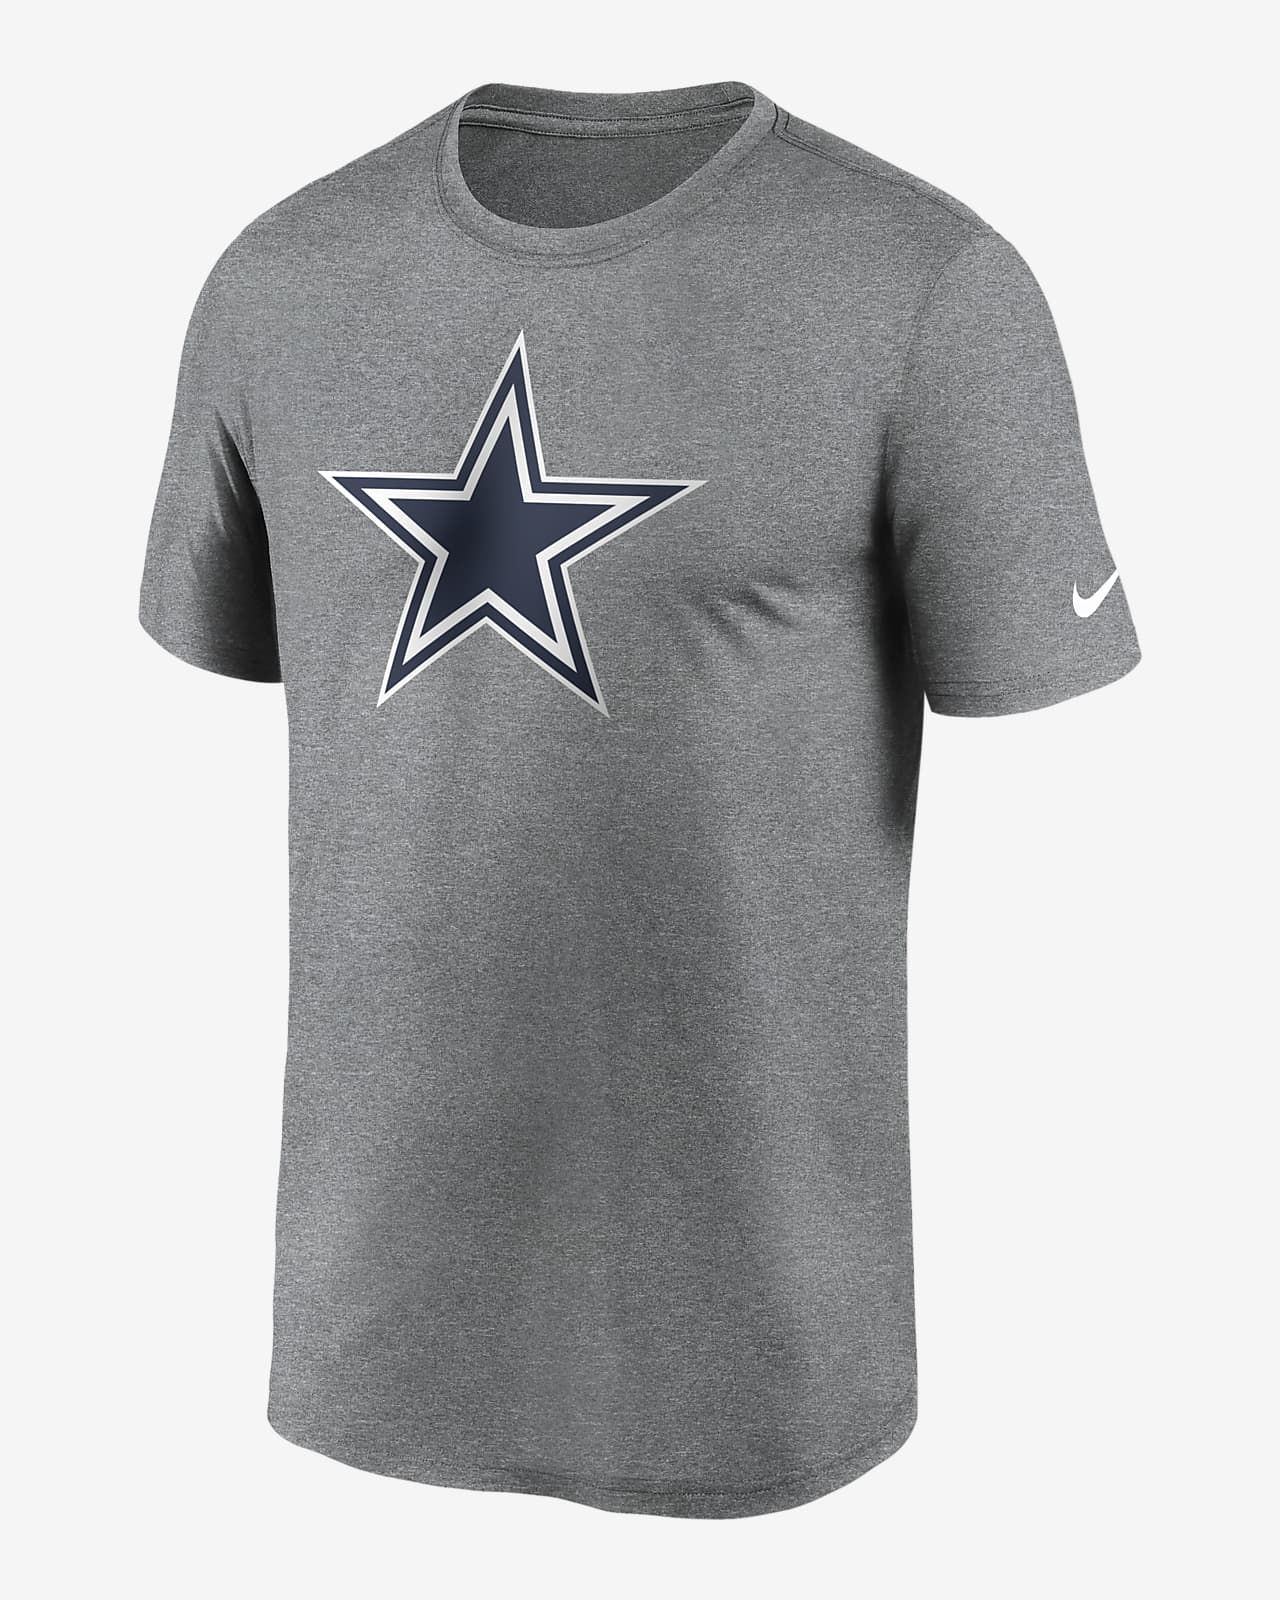 Nike Dri-FIT Logo Legend (NFL Dallas Cowboys) Men's T-Shirt.